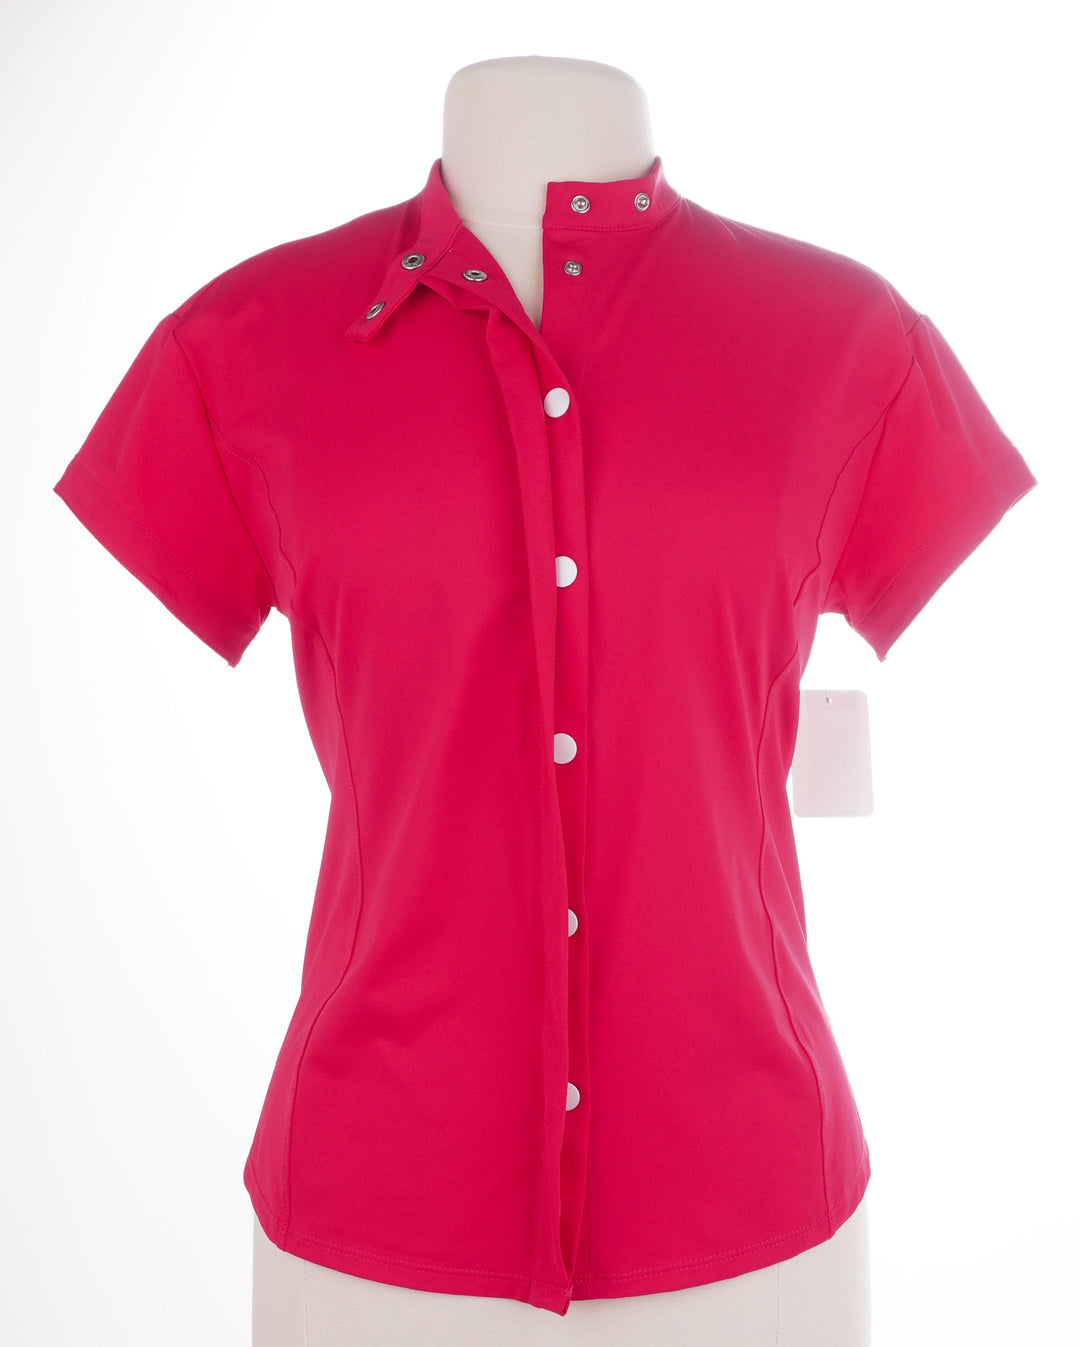 Kinona Band Collar Beauty Short Sleeve Golf Top - Size Small - Skorzie